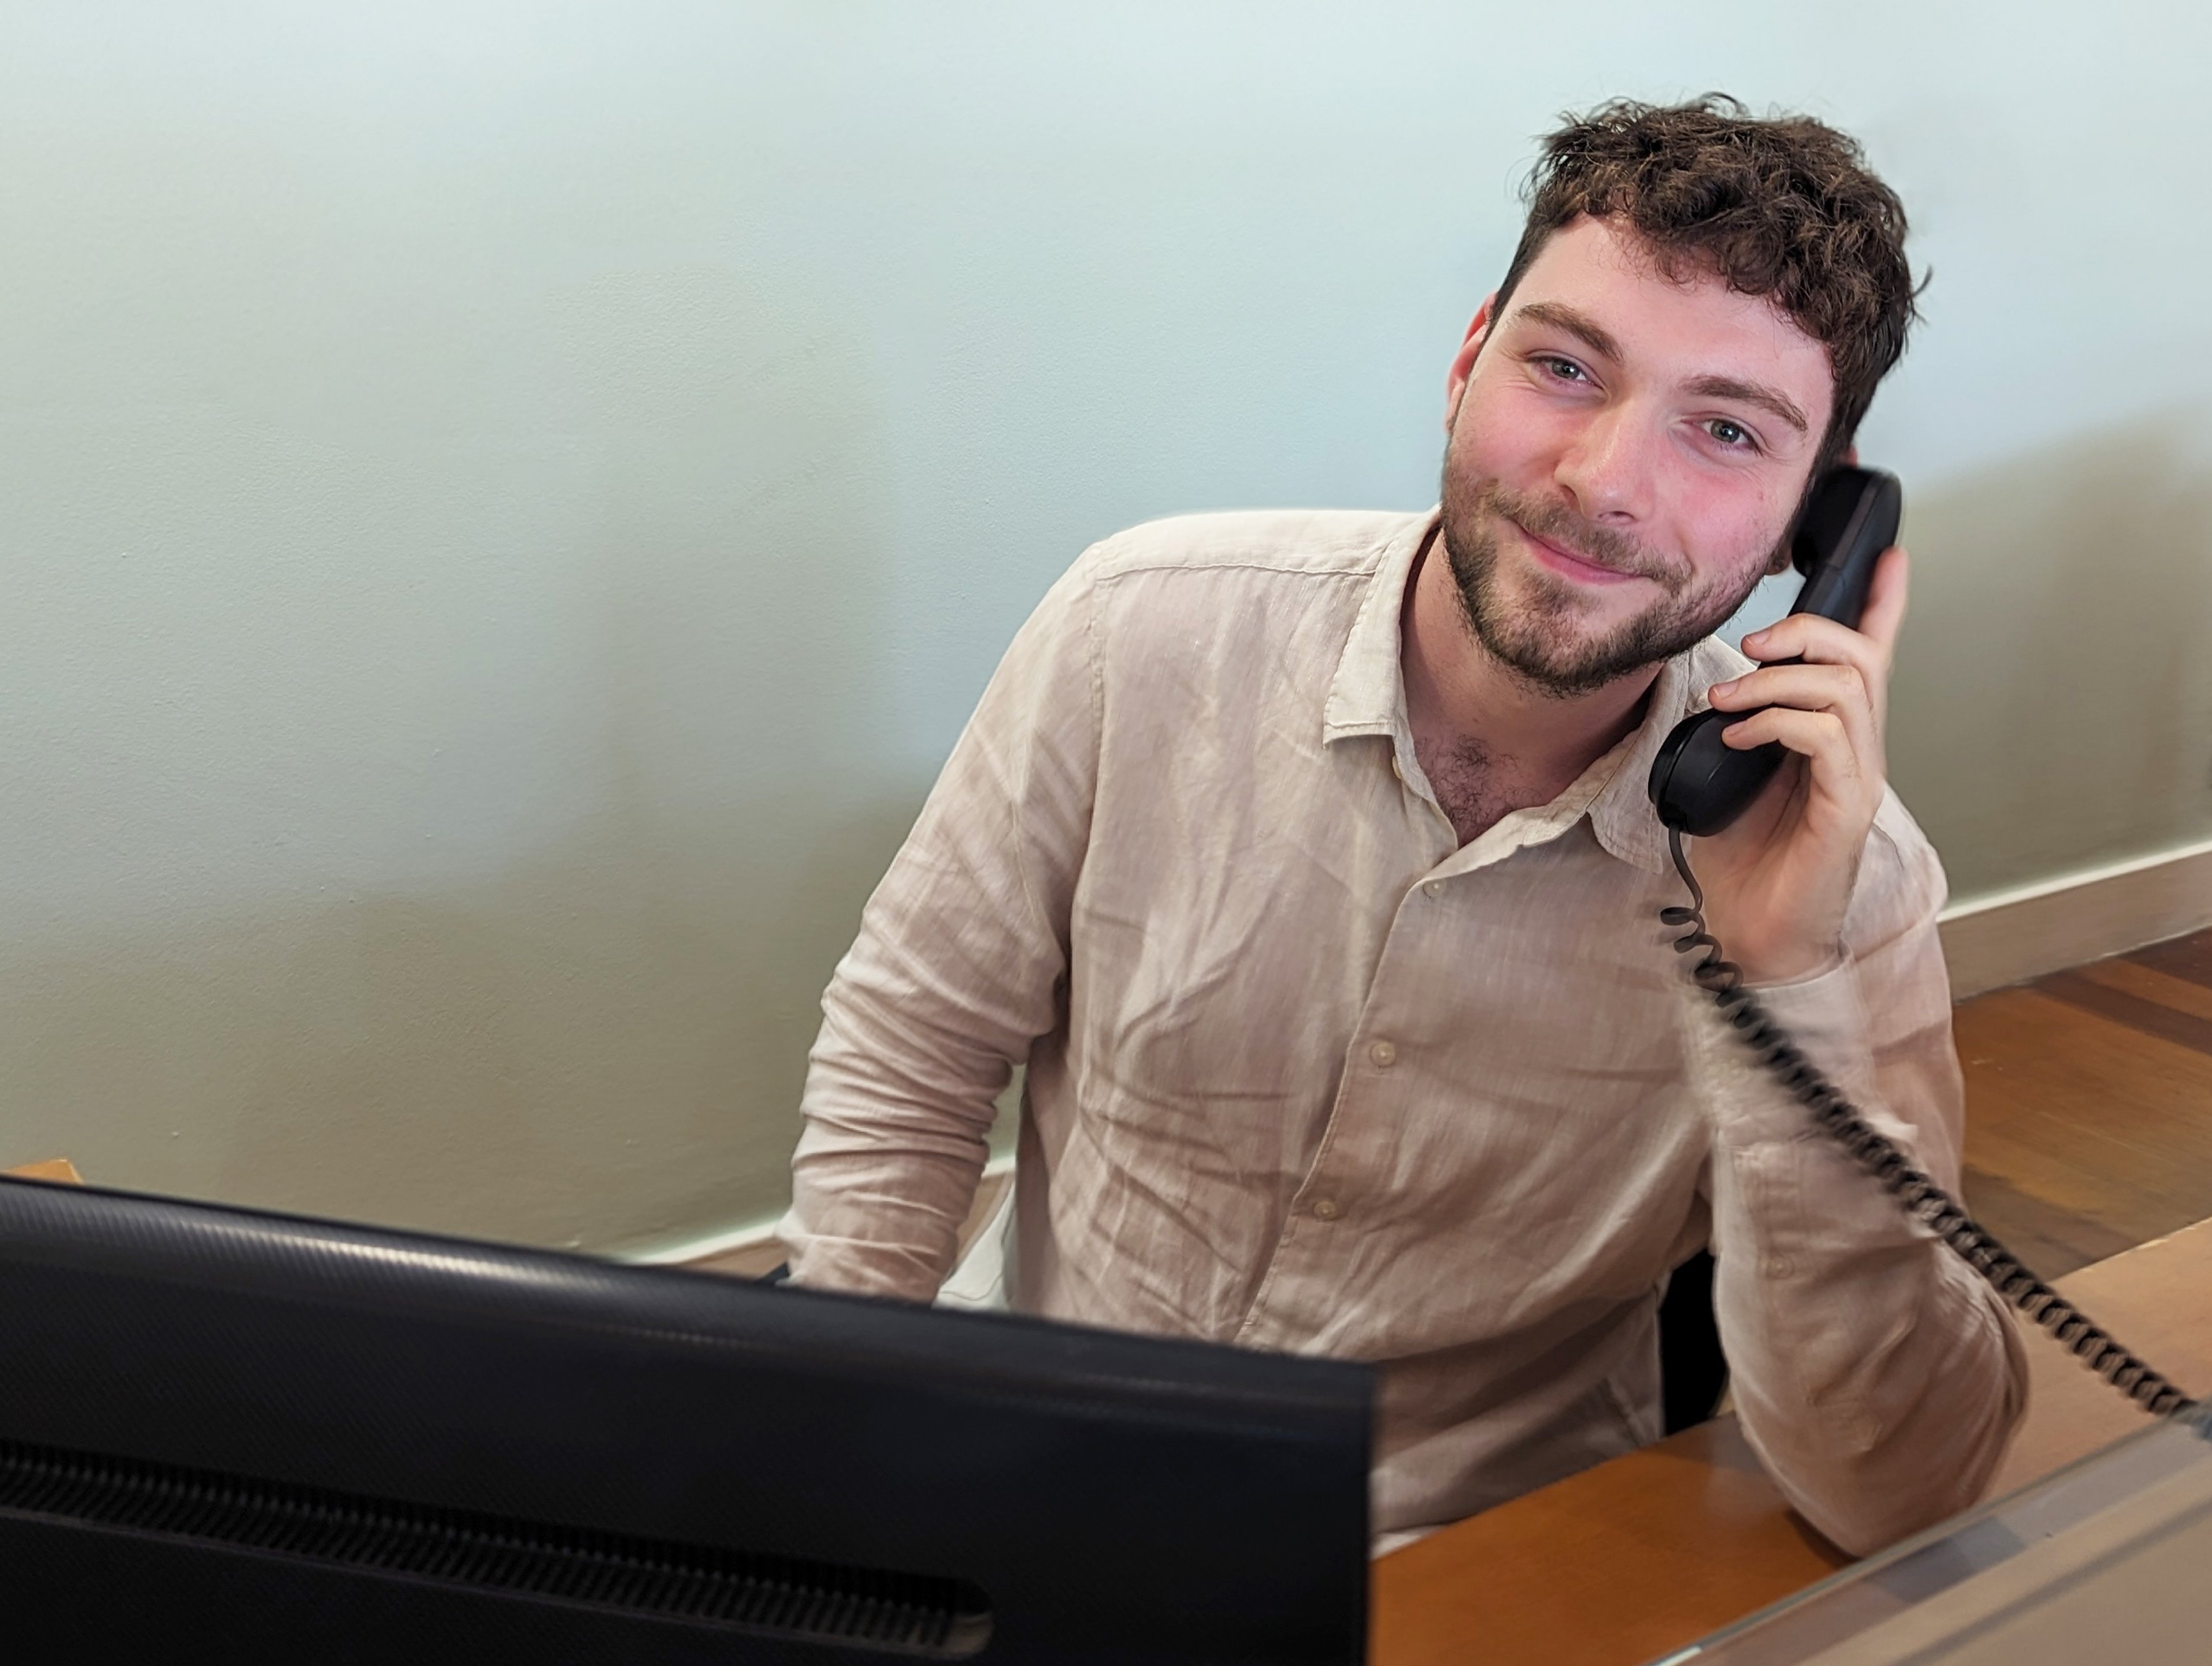 A youn man sitting at a computer, holding a phone, smiling at the camera.